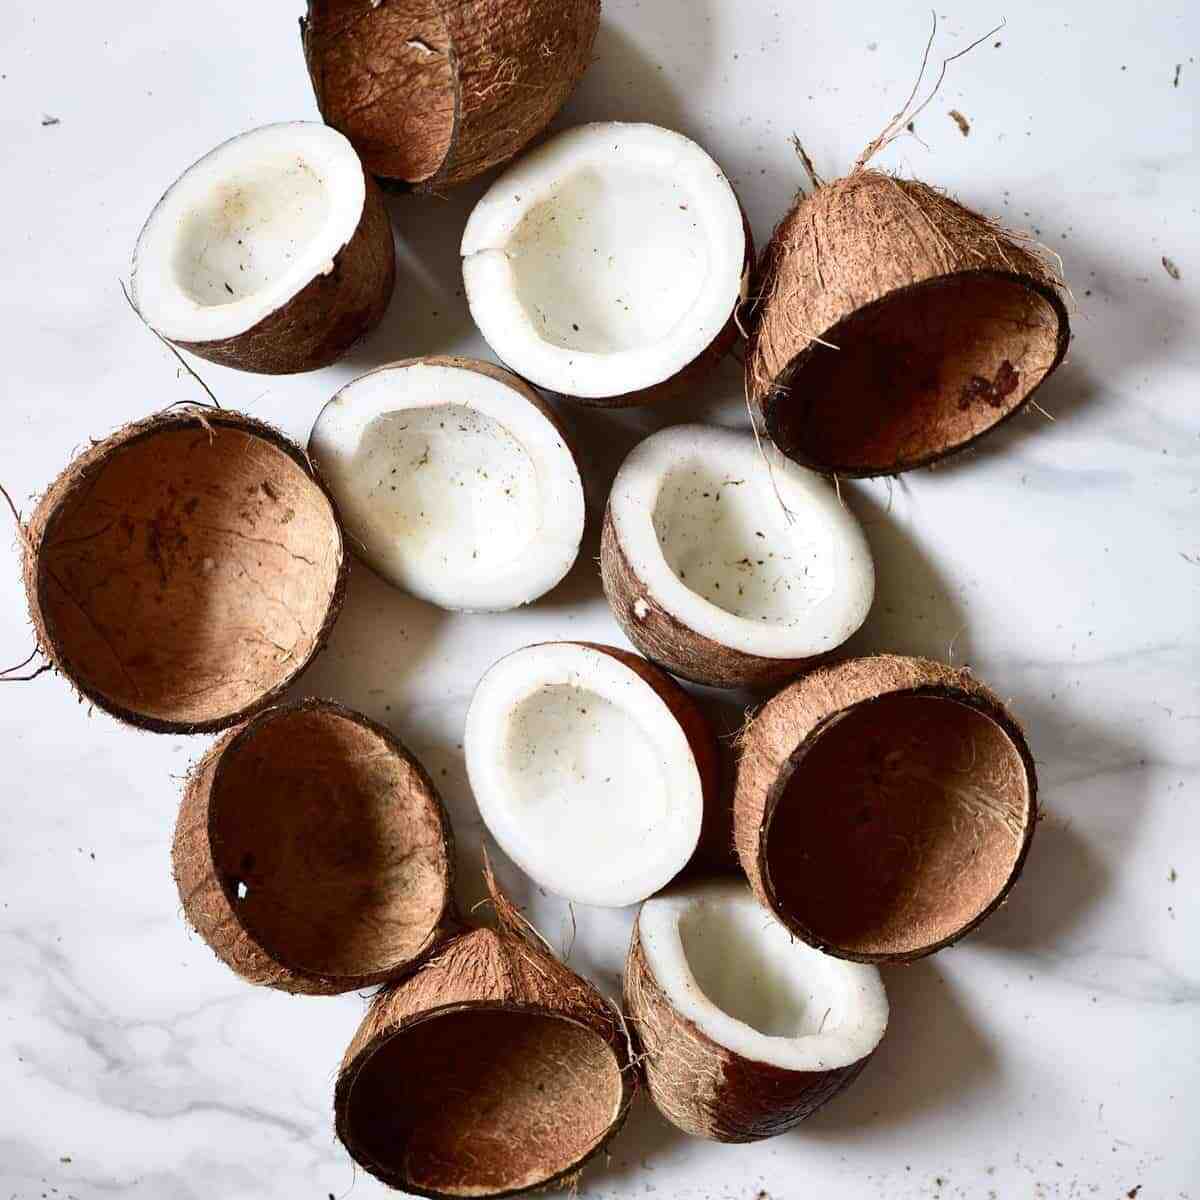 How do you open a stubborn coconut?